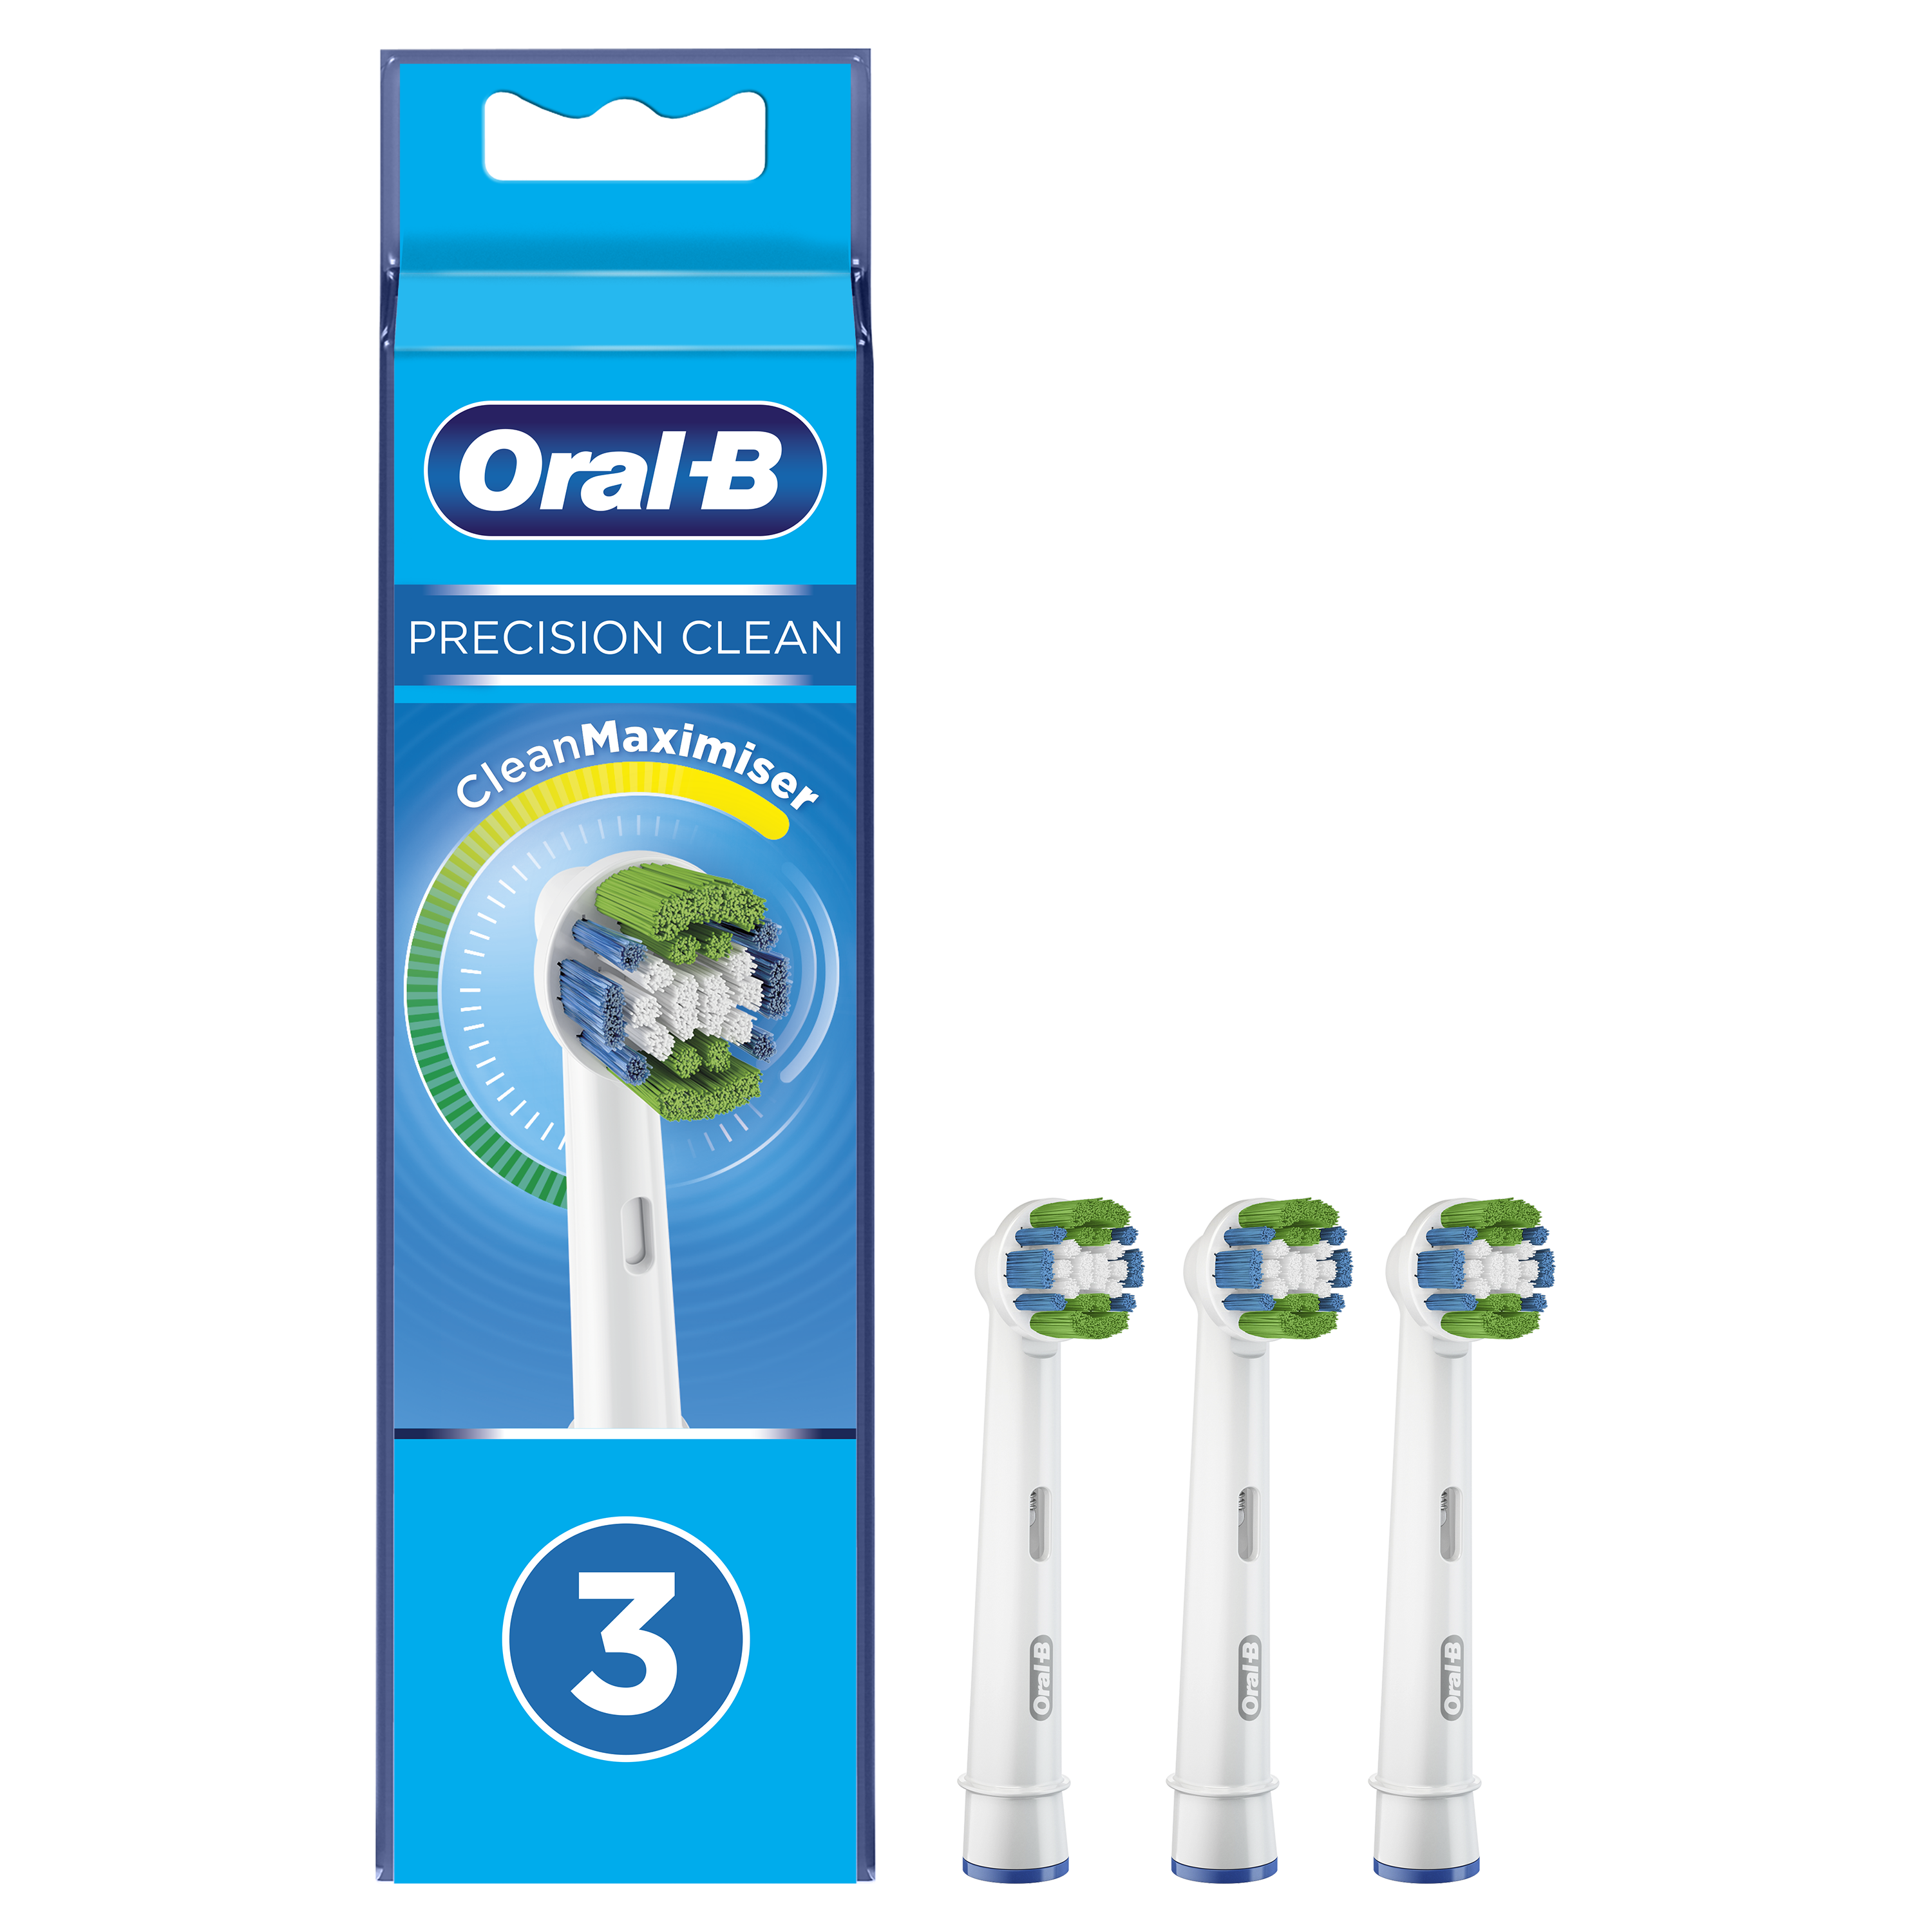 Precision Clean Maximiser Oral-B - 3 brossettes